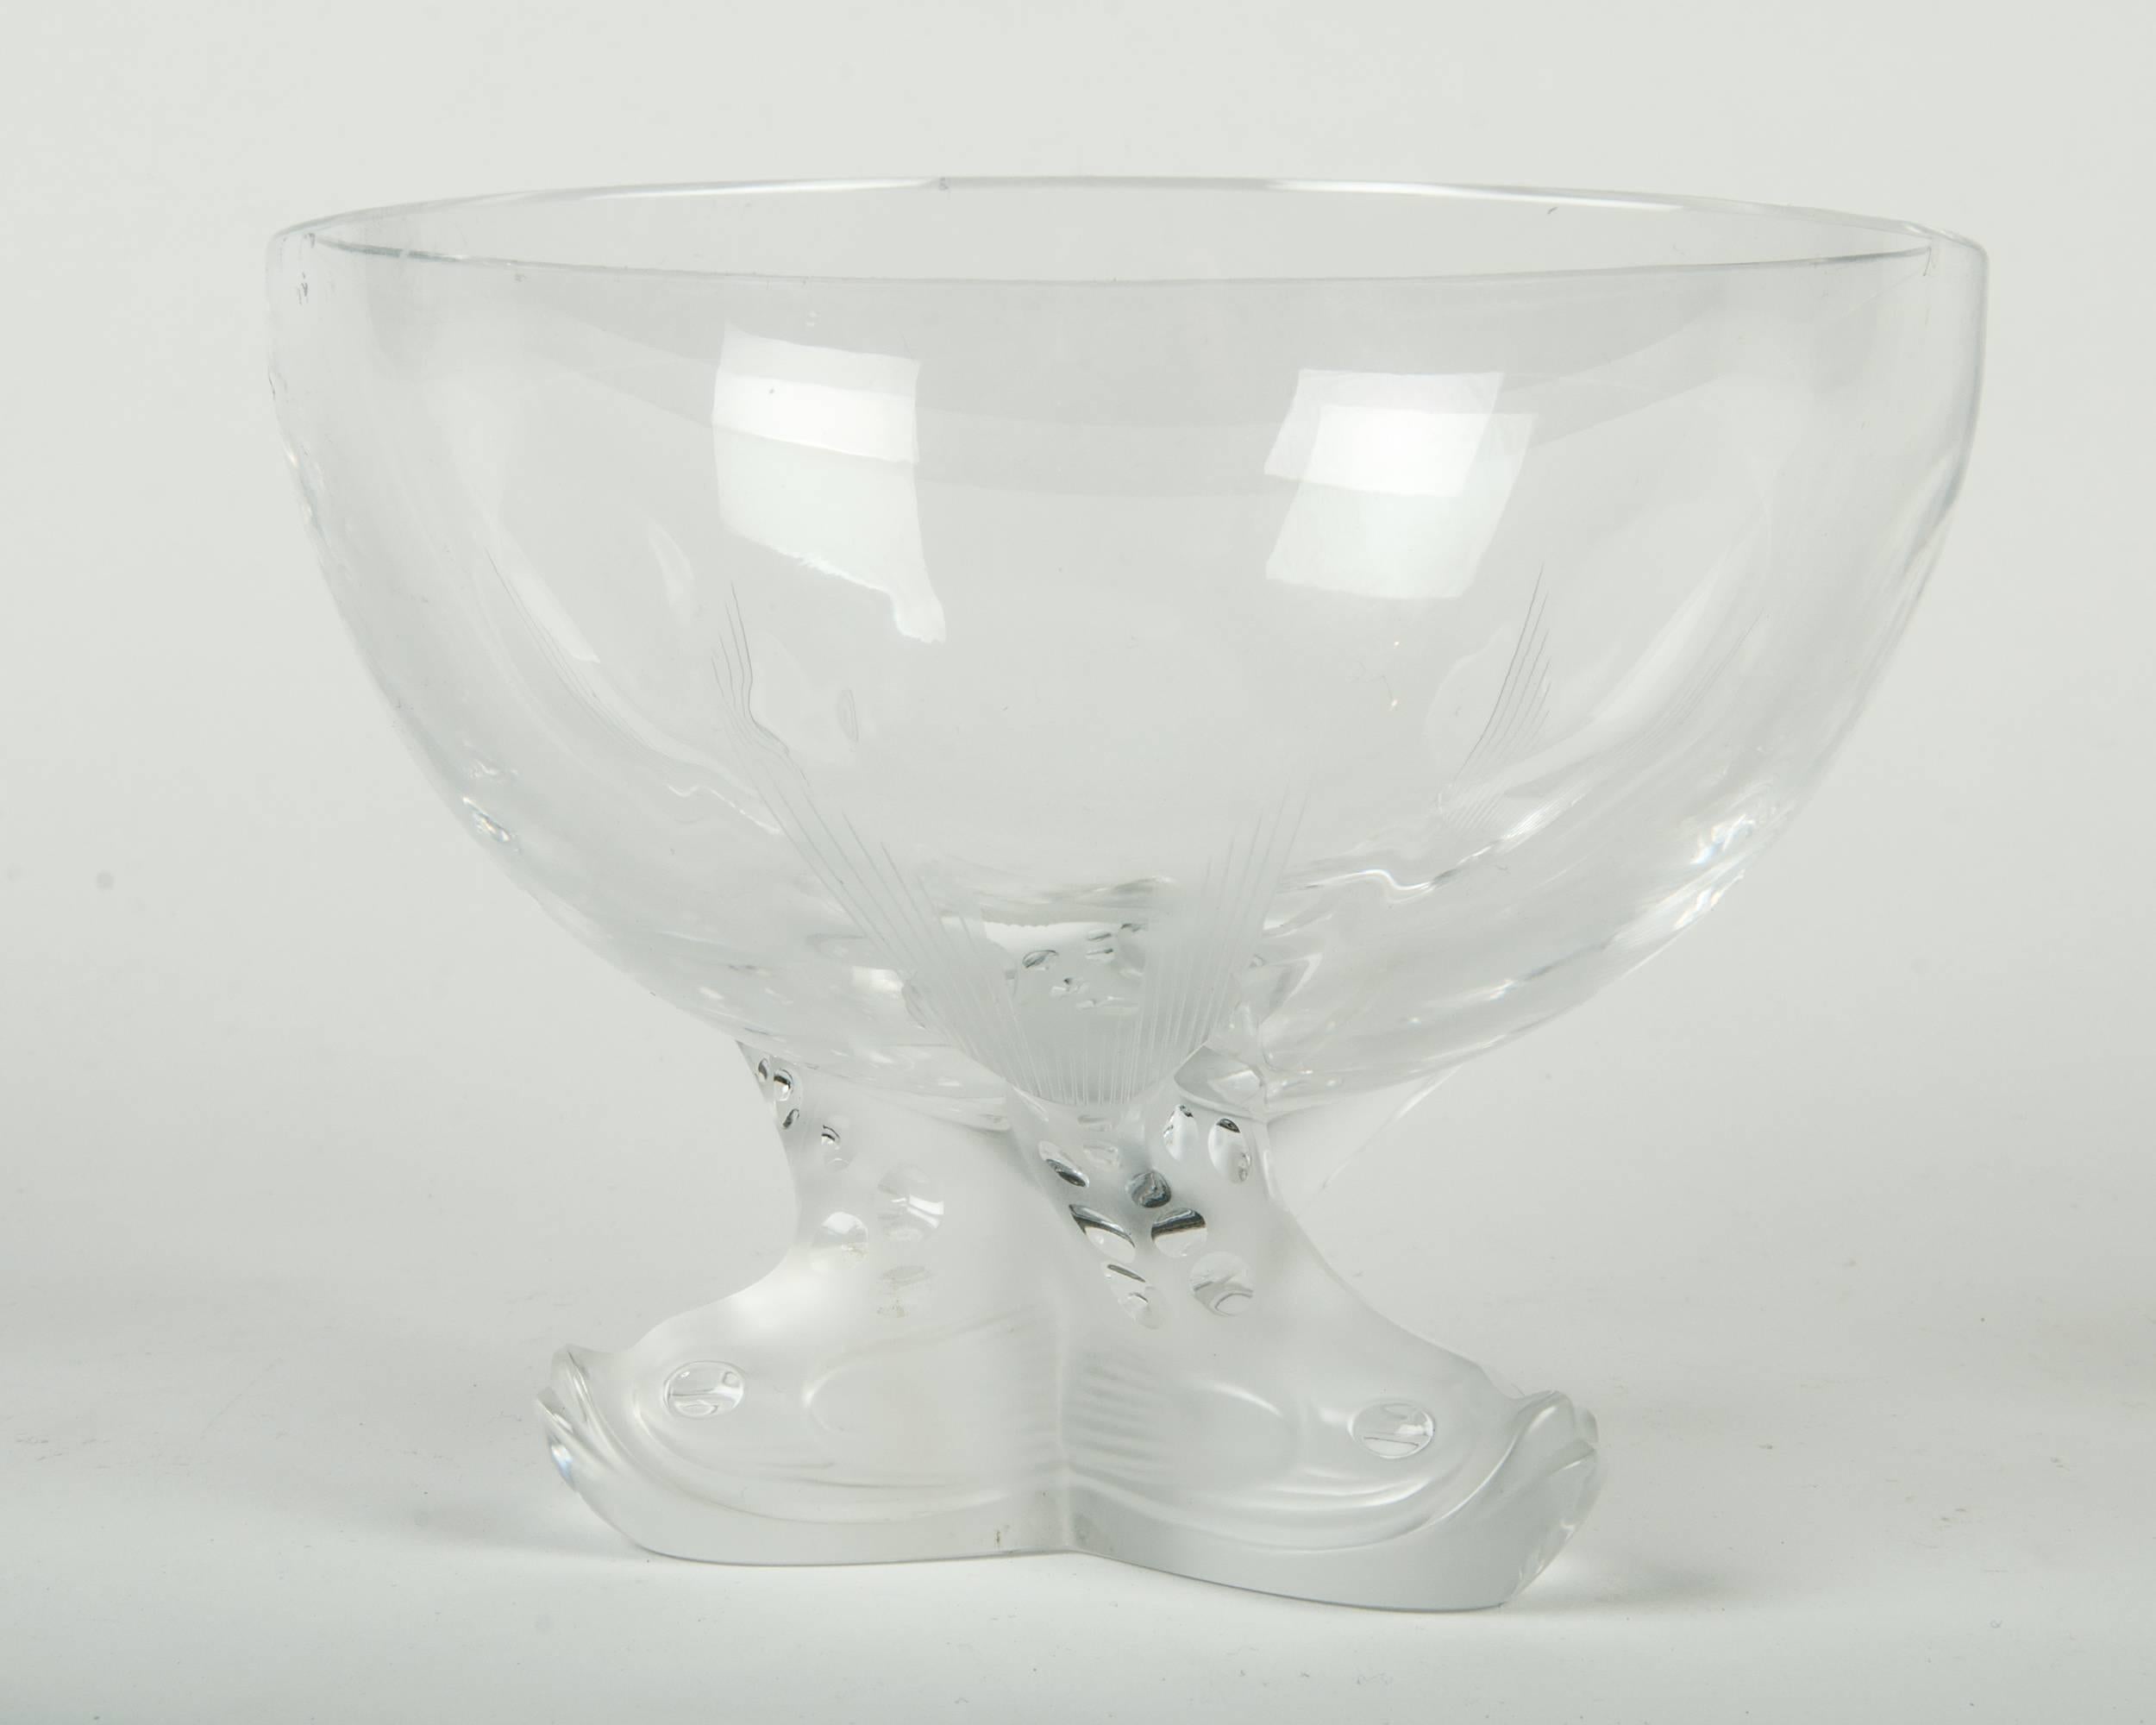 Vintage Lalique decorative catch all bowl / piece. The piece measure 7.5 inches diameter X 6 inches high. Excellent condition.